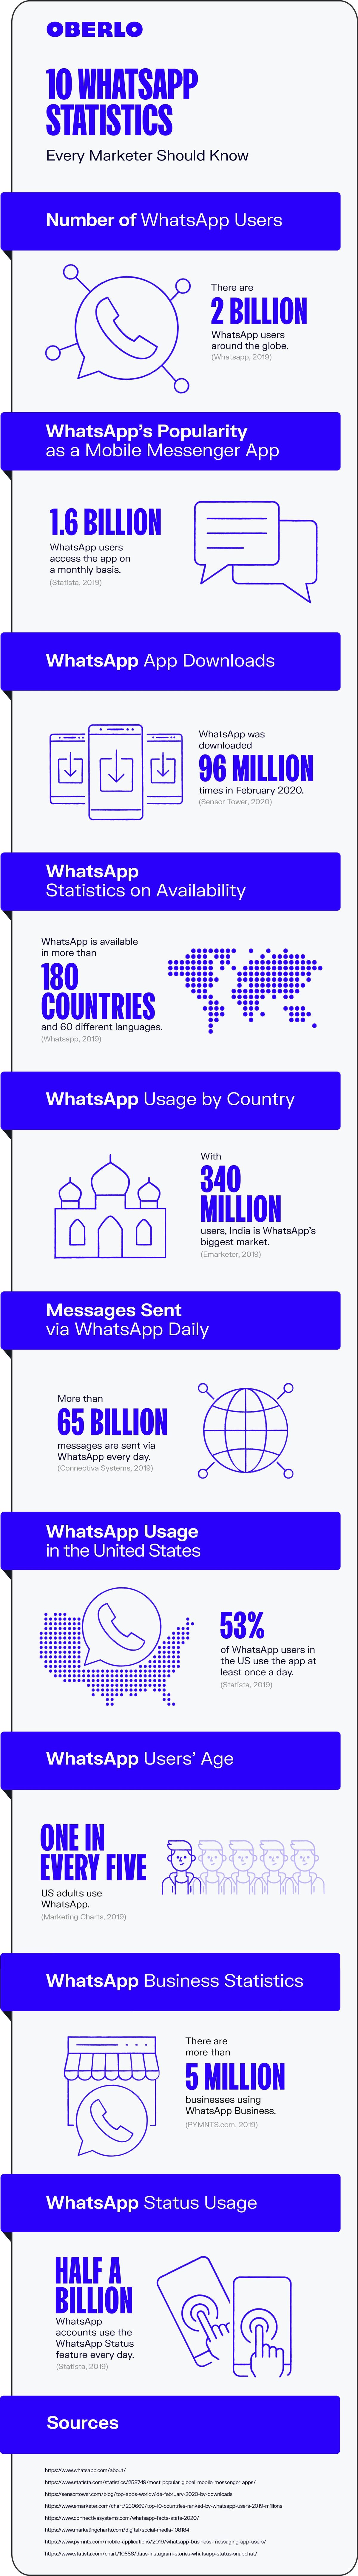 WhatsApp Statistik 2020